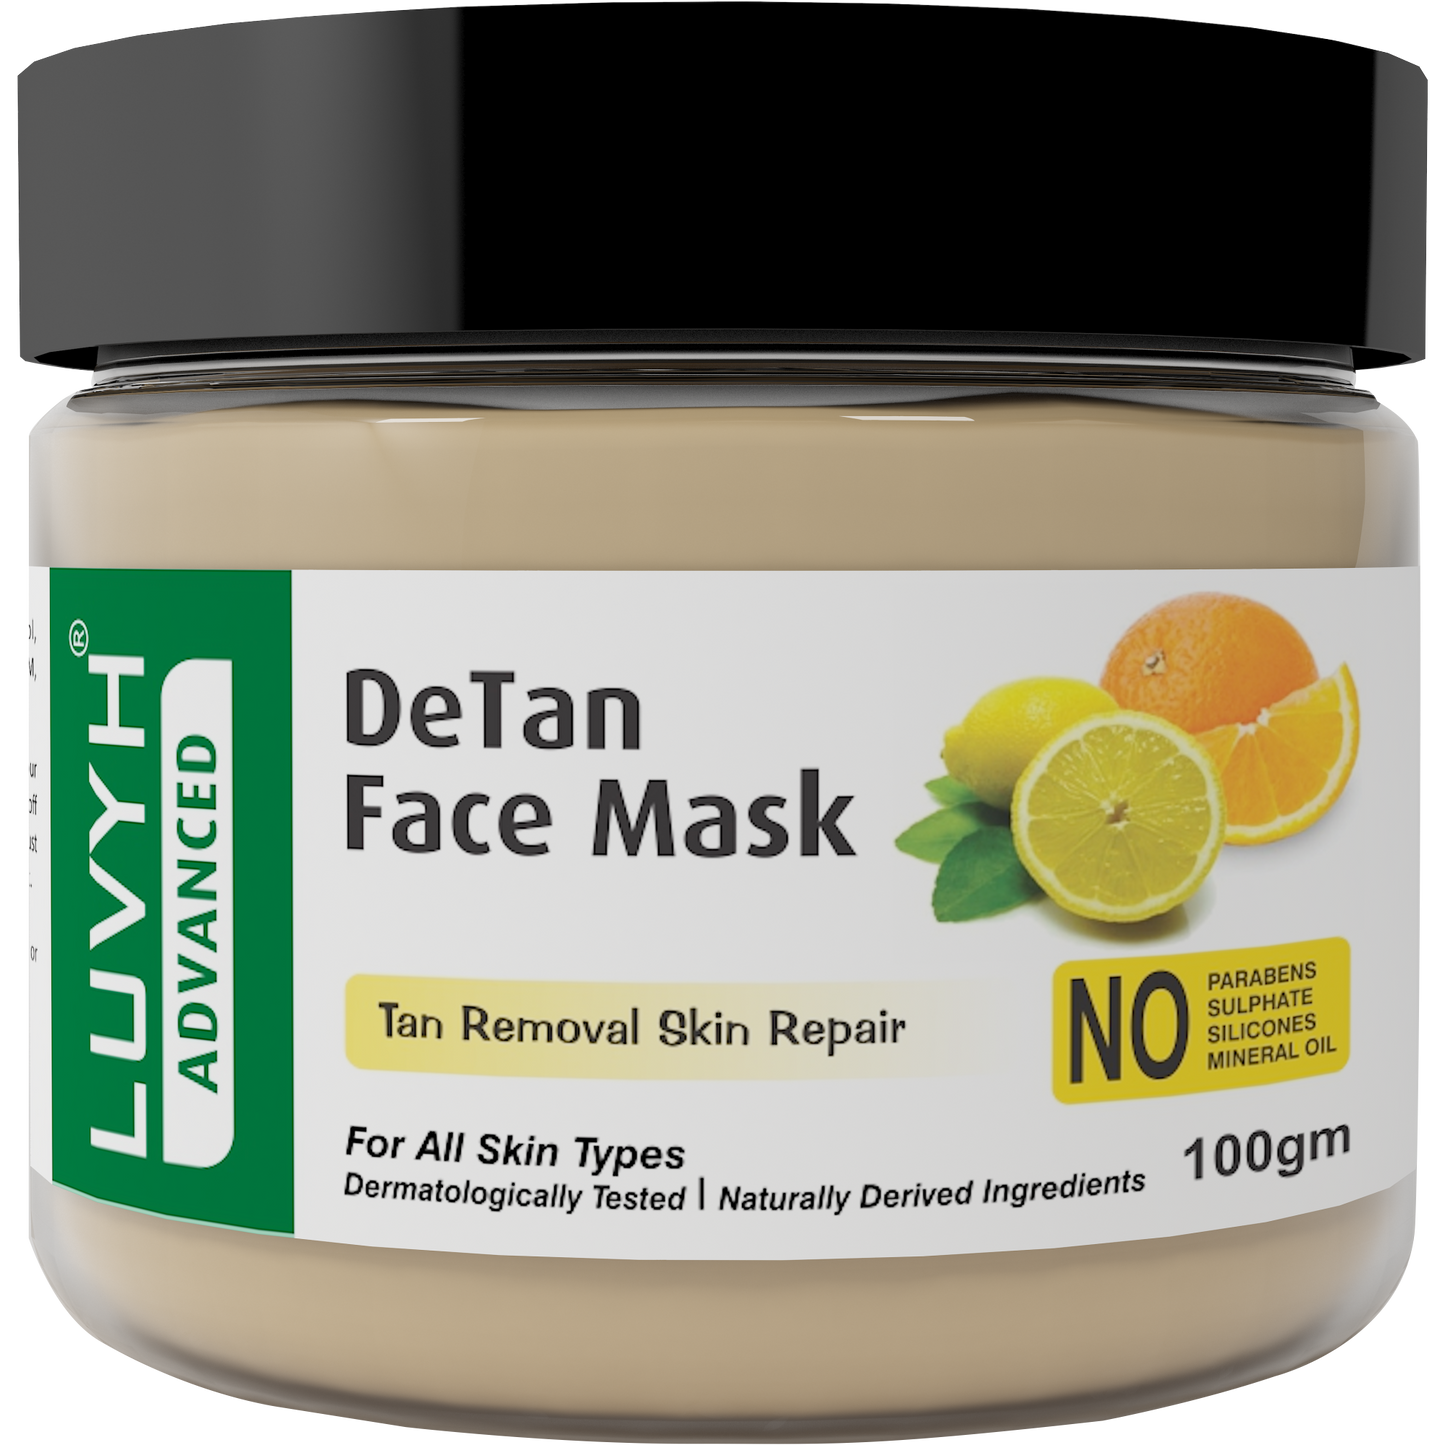 Luvyh DeTan Face Mask- 100gm